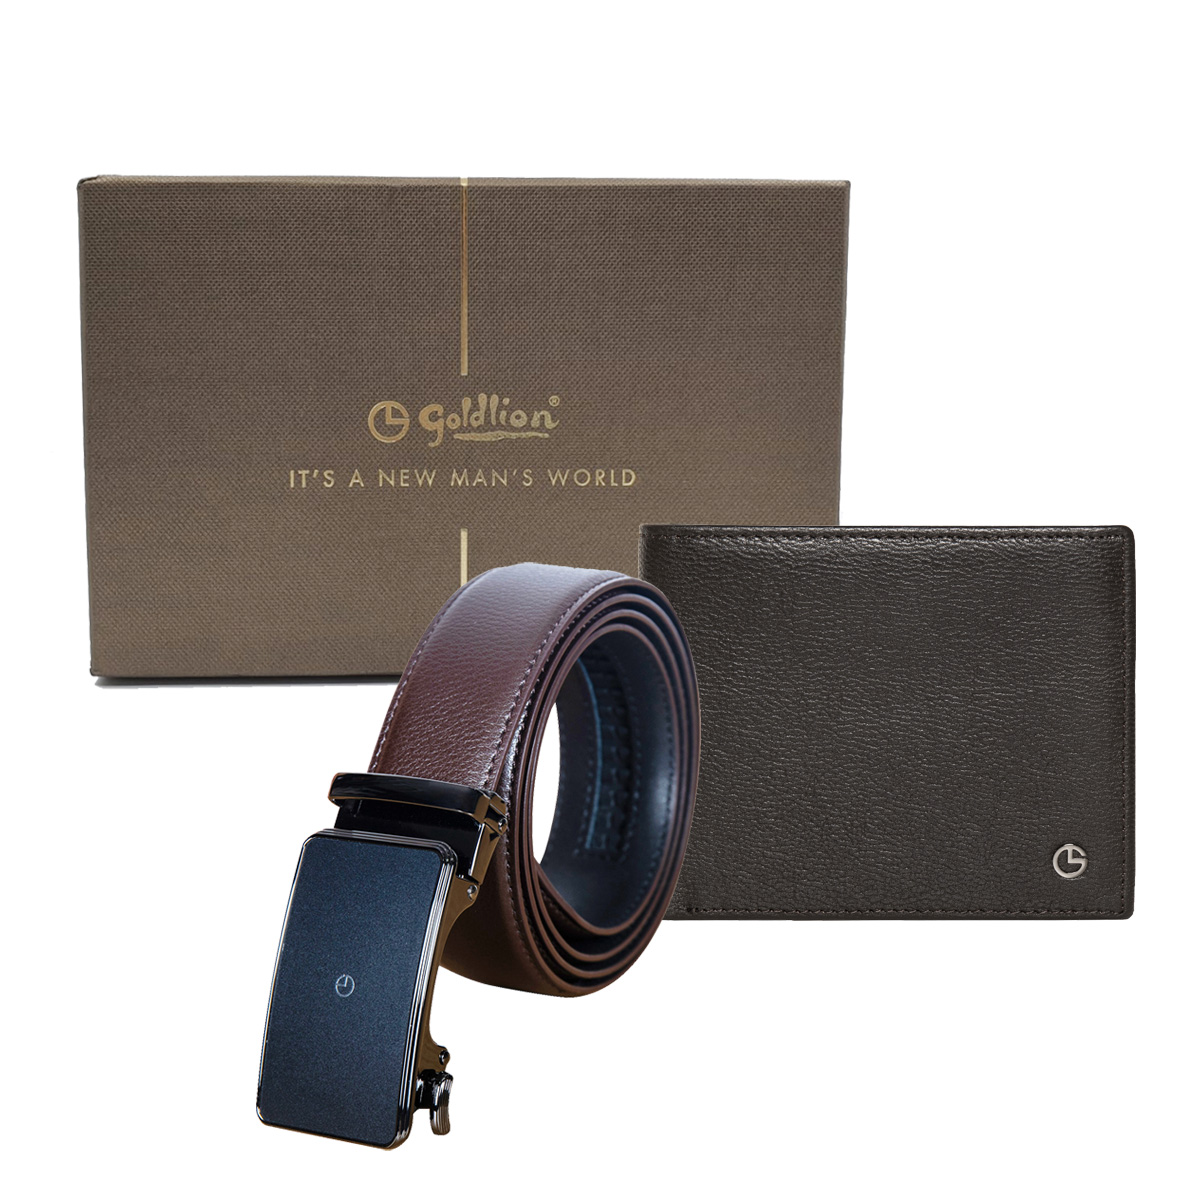 [Online Exclusive] Goldlion Genuine Leather 6 Cards Slot Wallet & Auto Lock Belt Gift Set